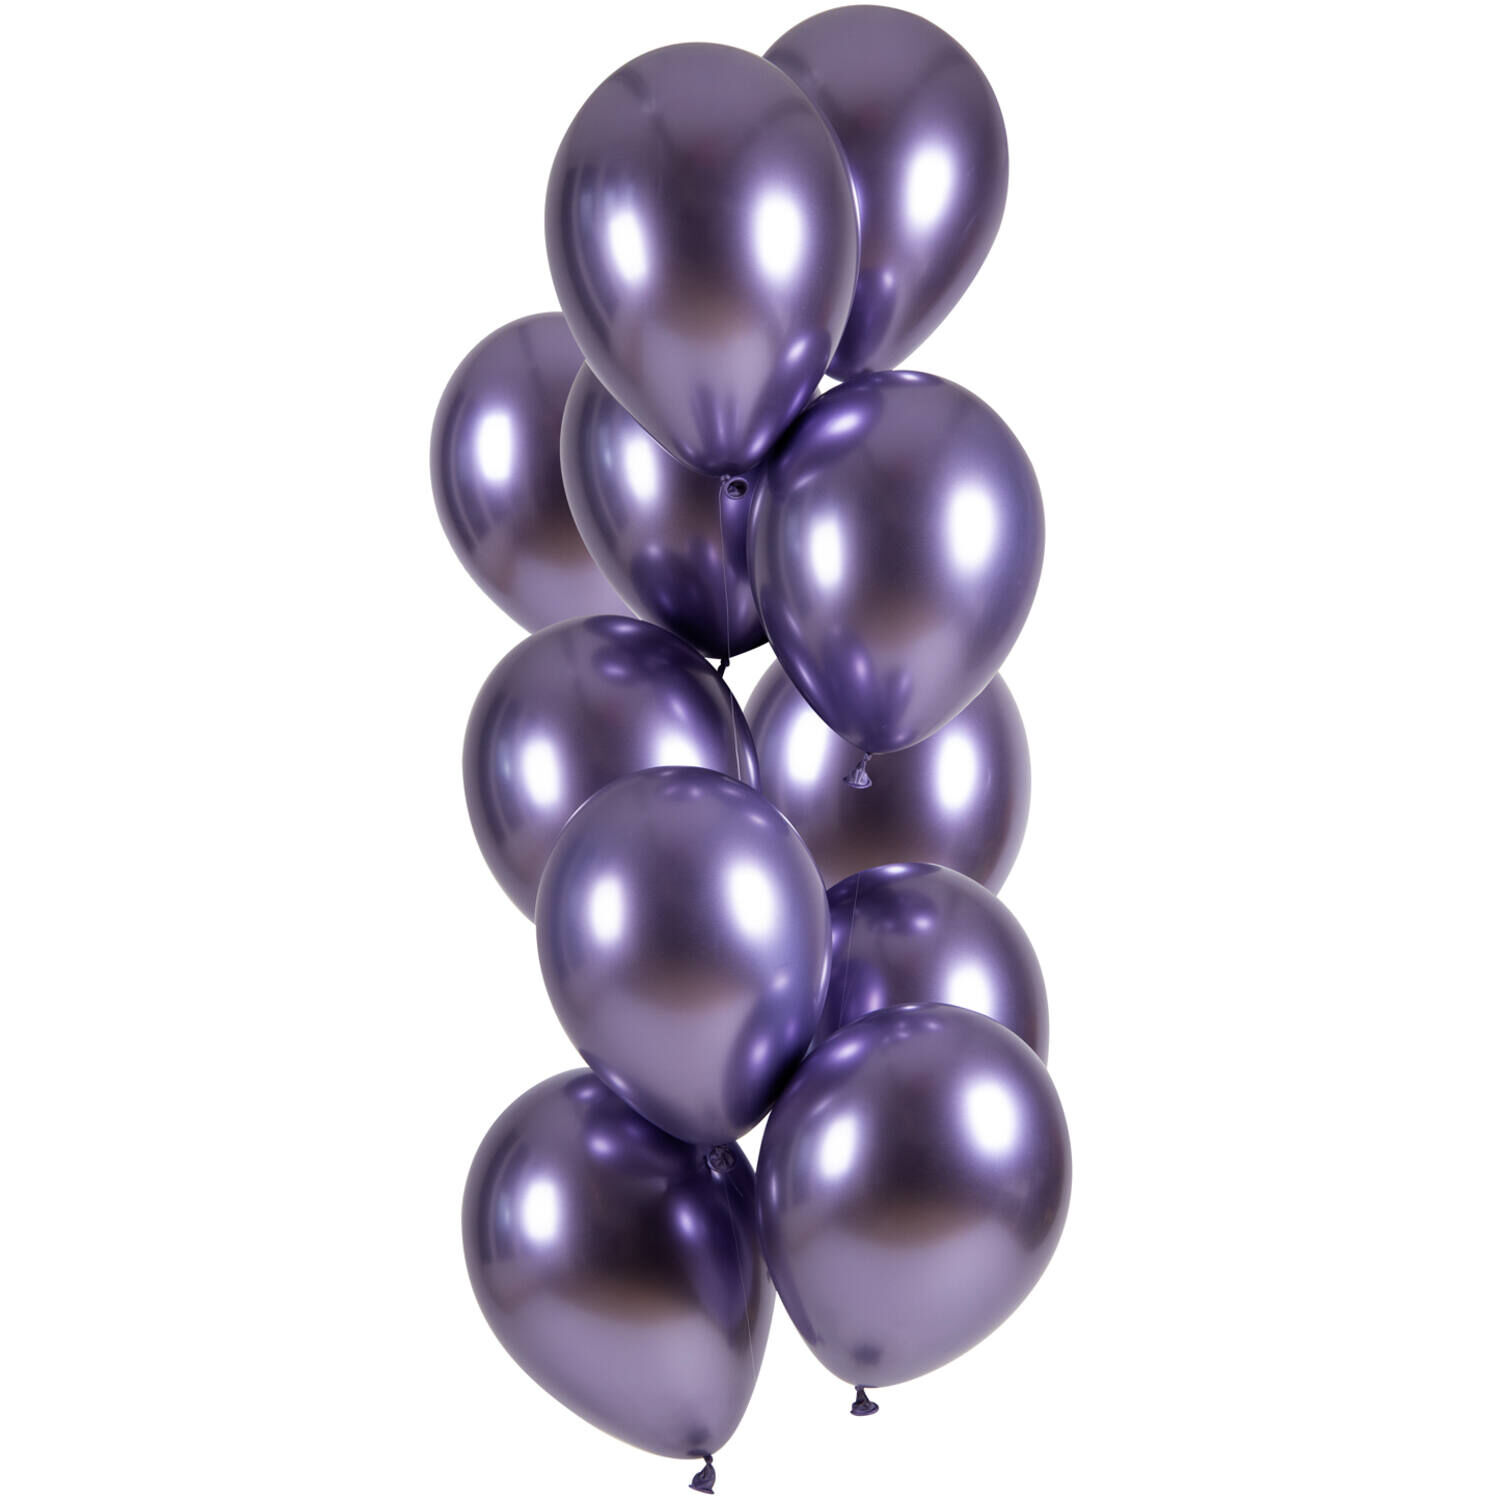 NEU Premium-Latex-Luftballons Ultra Shine Lila, 33cm, 12 Stk.